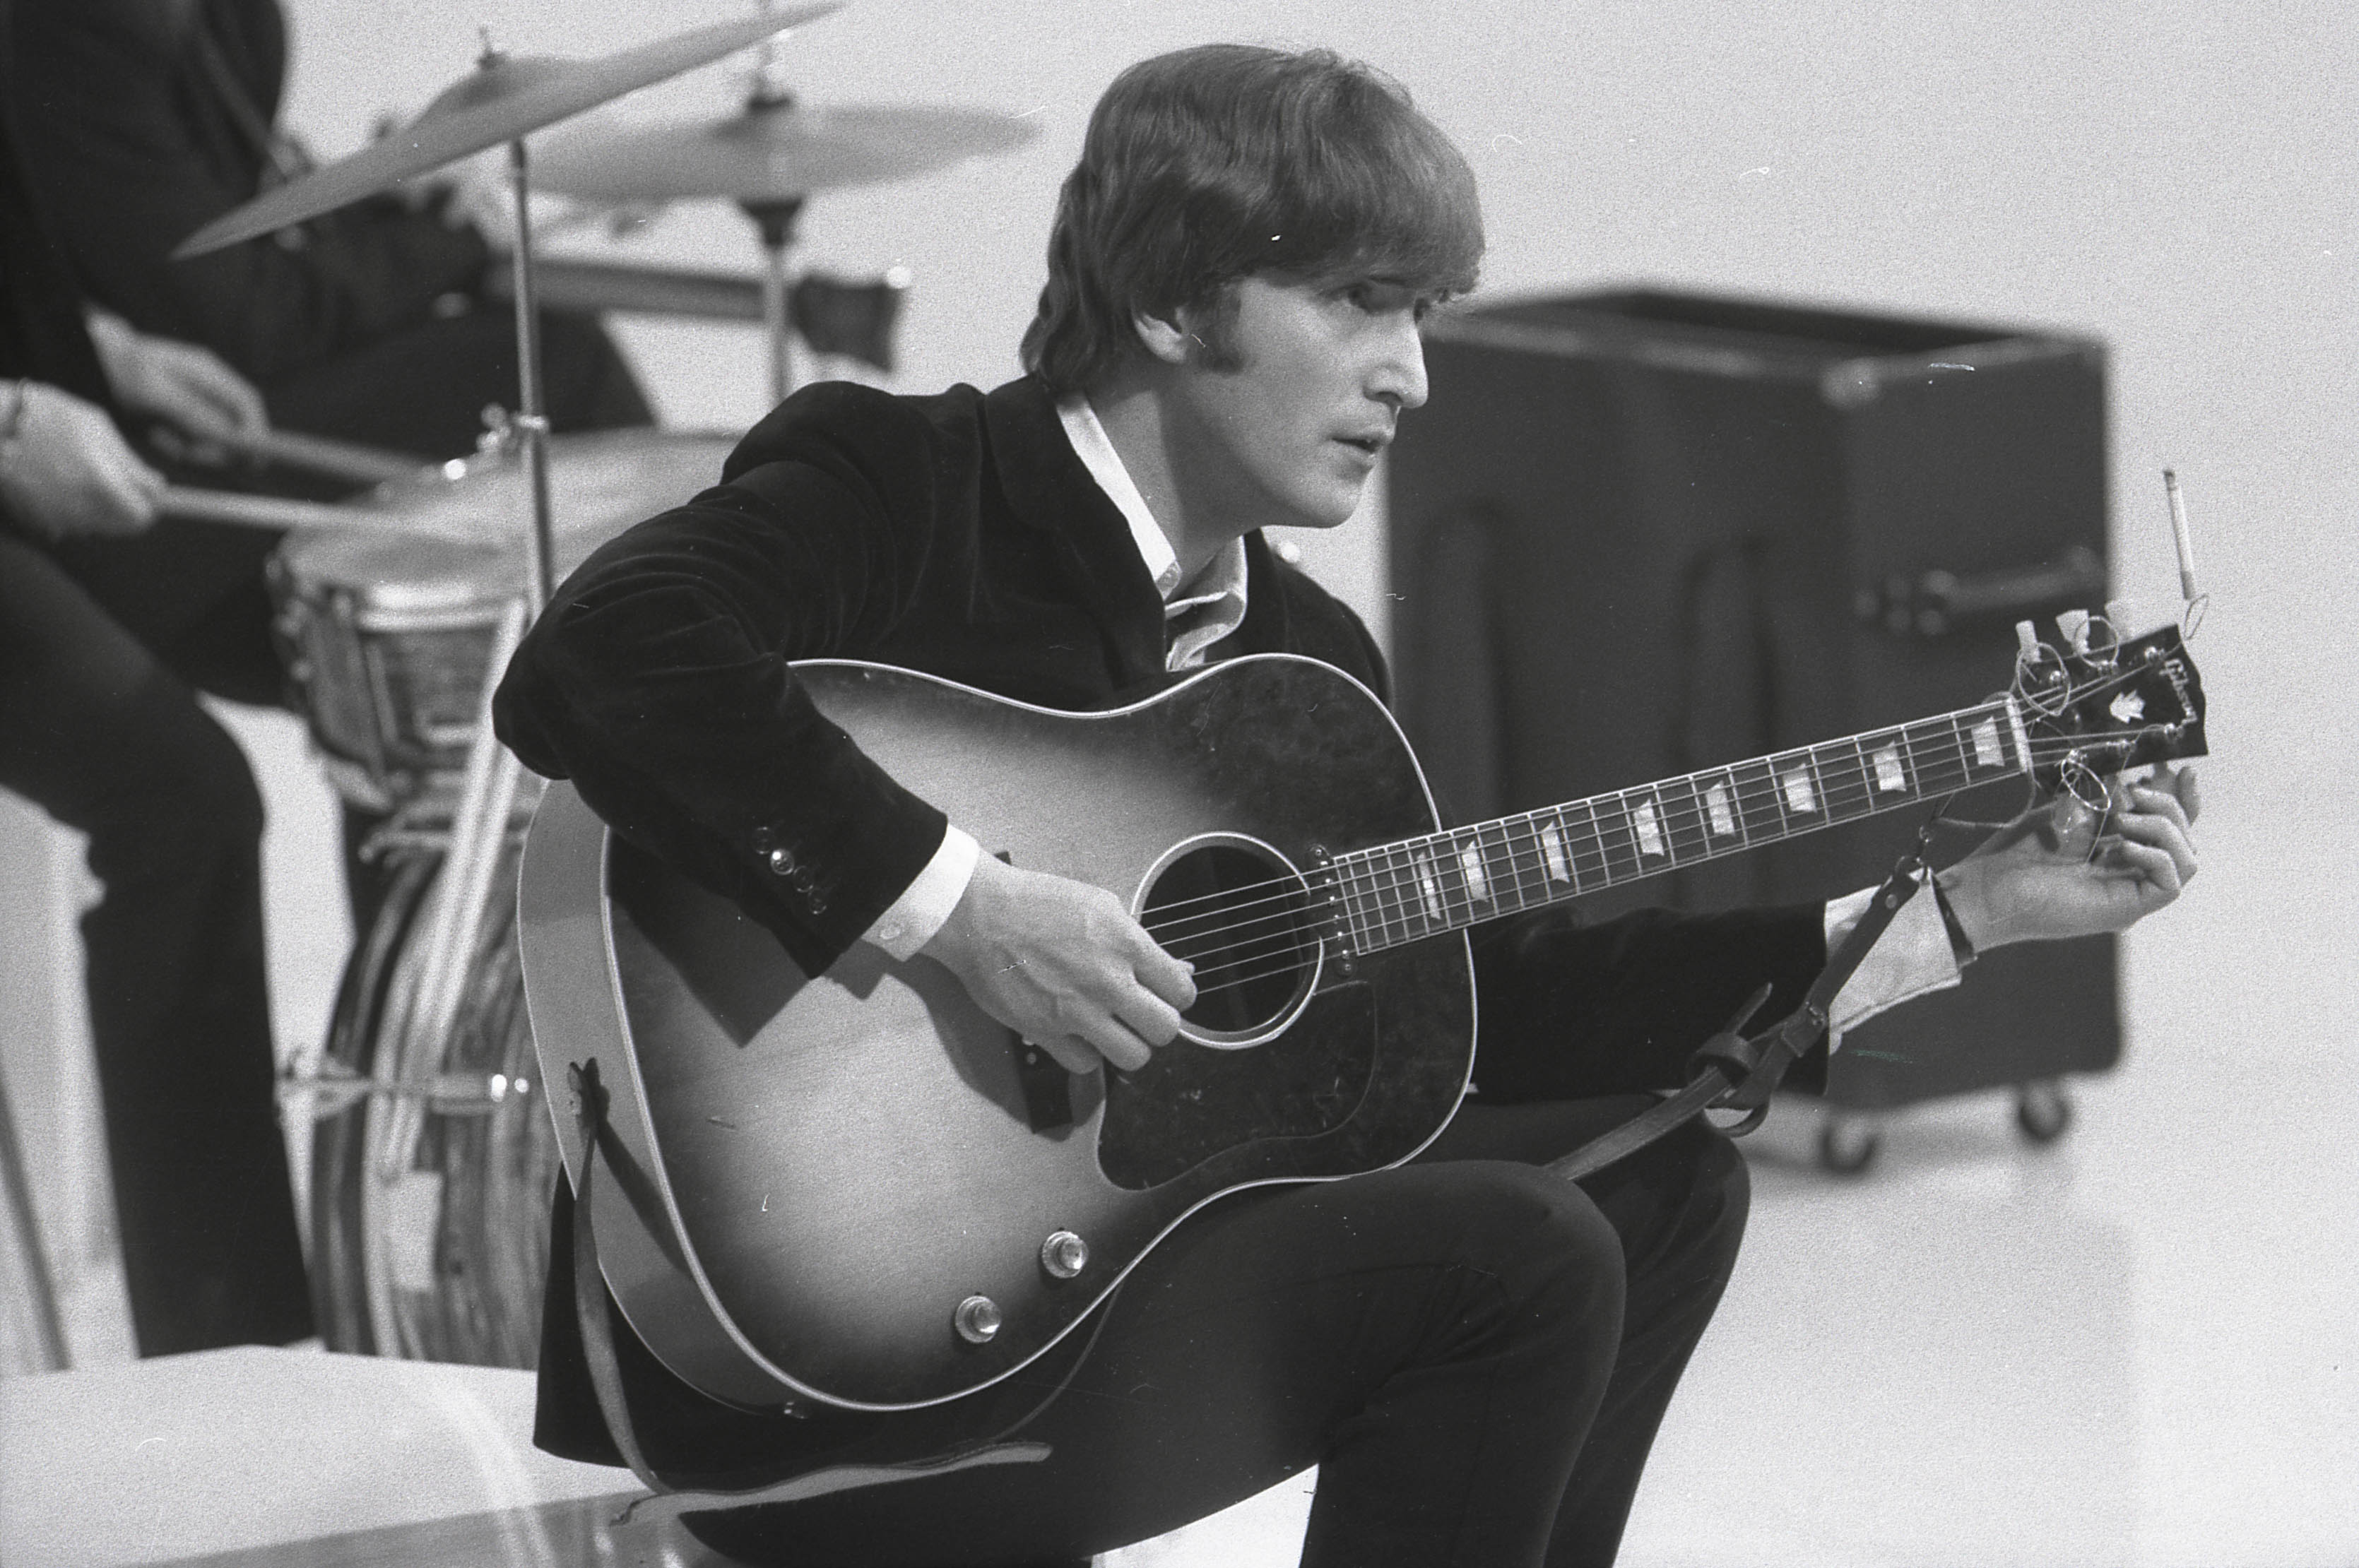 John Lennon sitting with his guitar